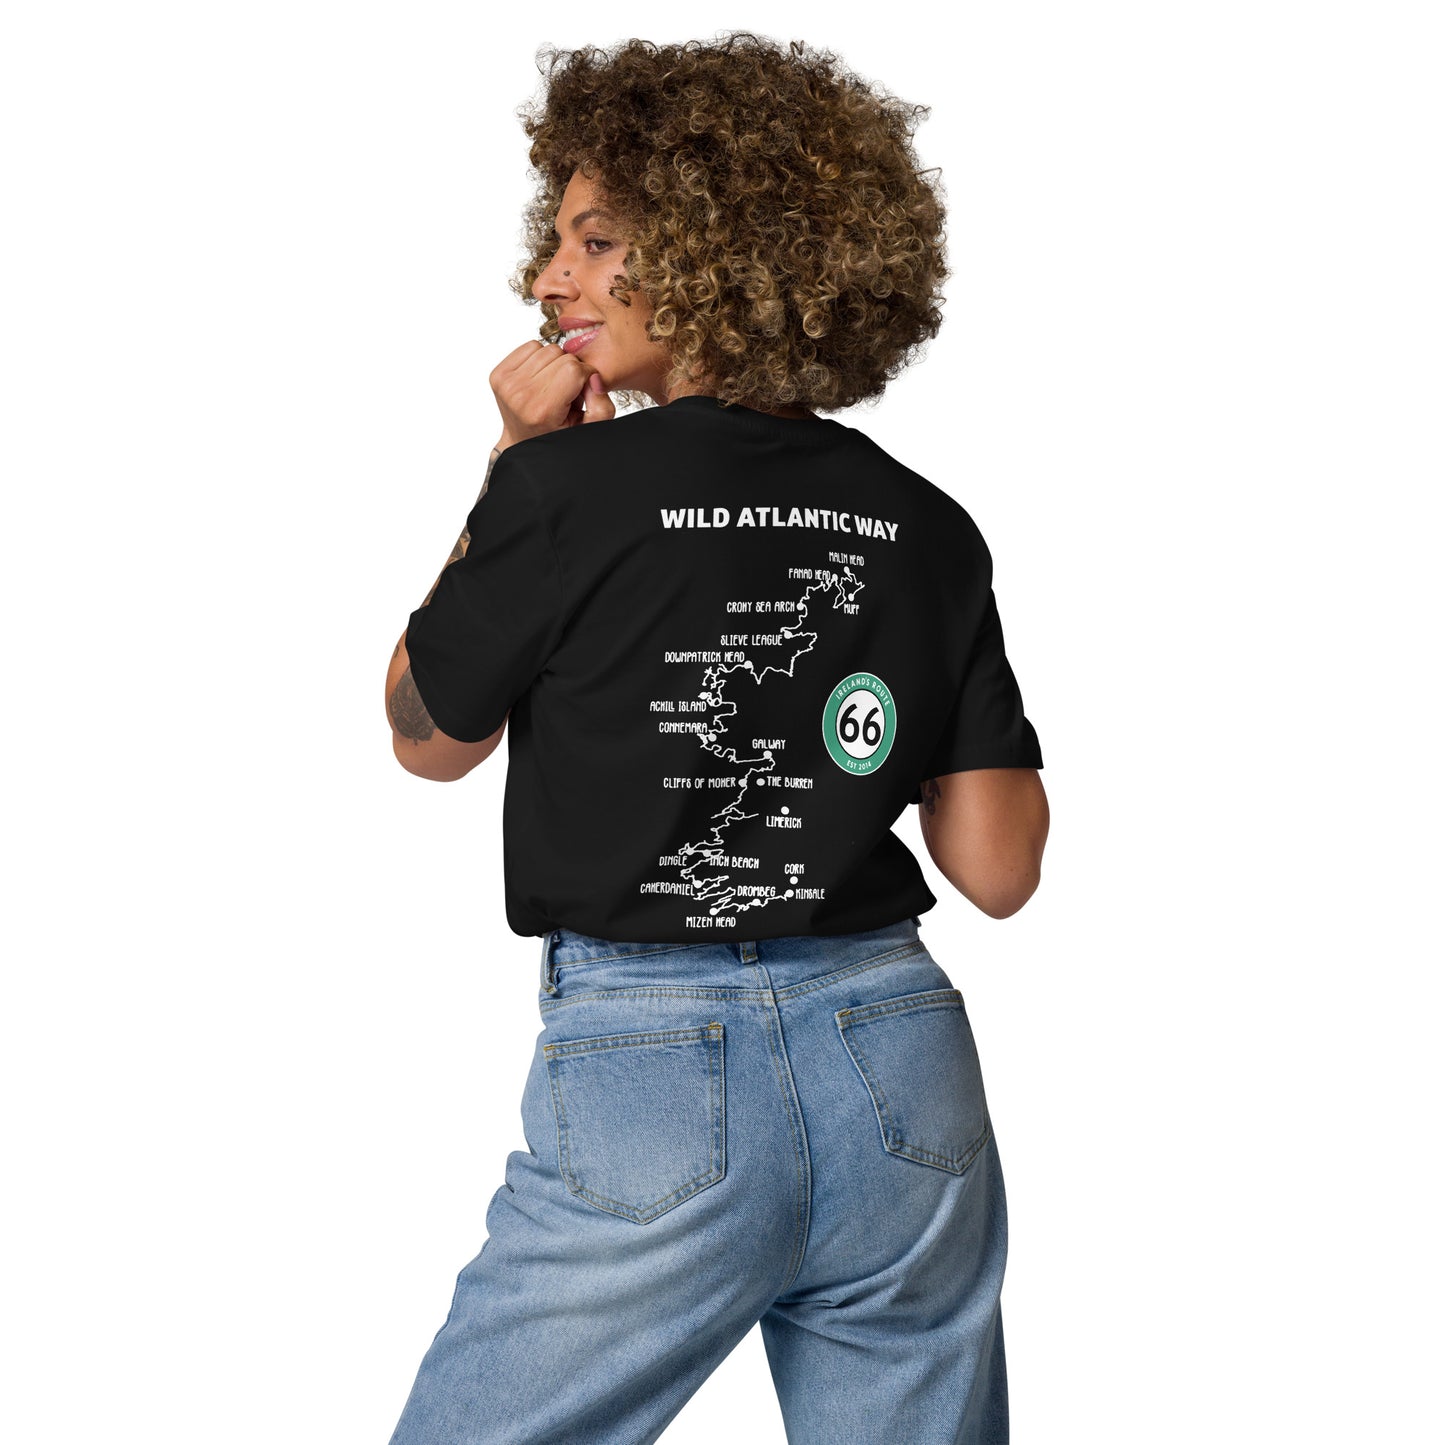 Ireland's Route 66 Unisex T-Shirt (Black)